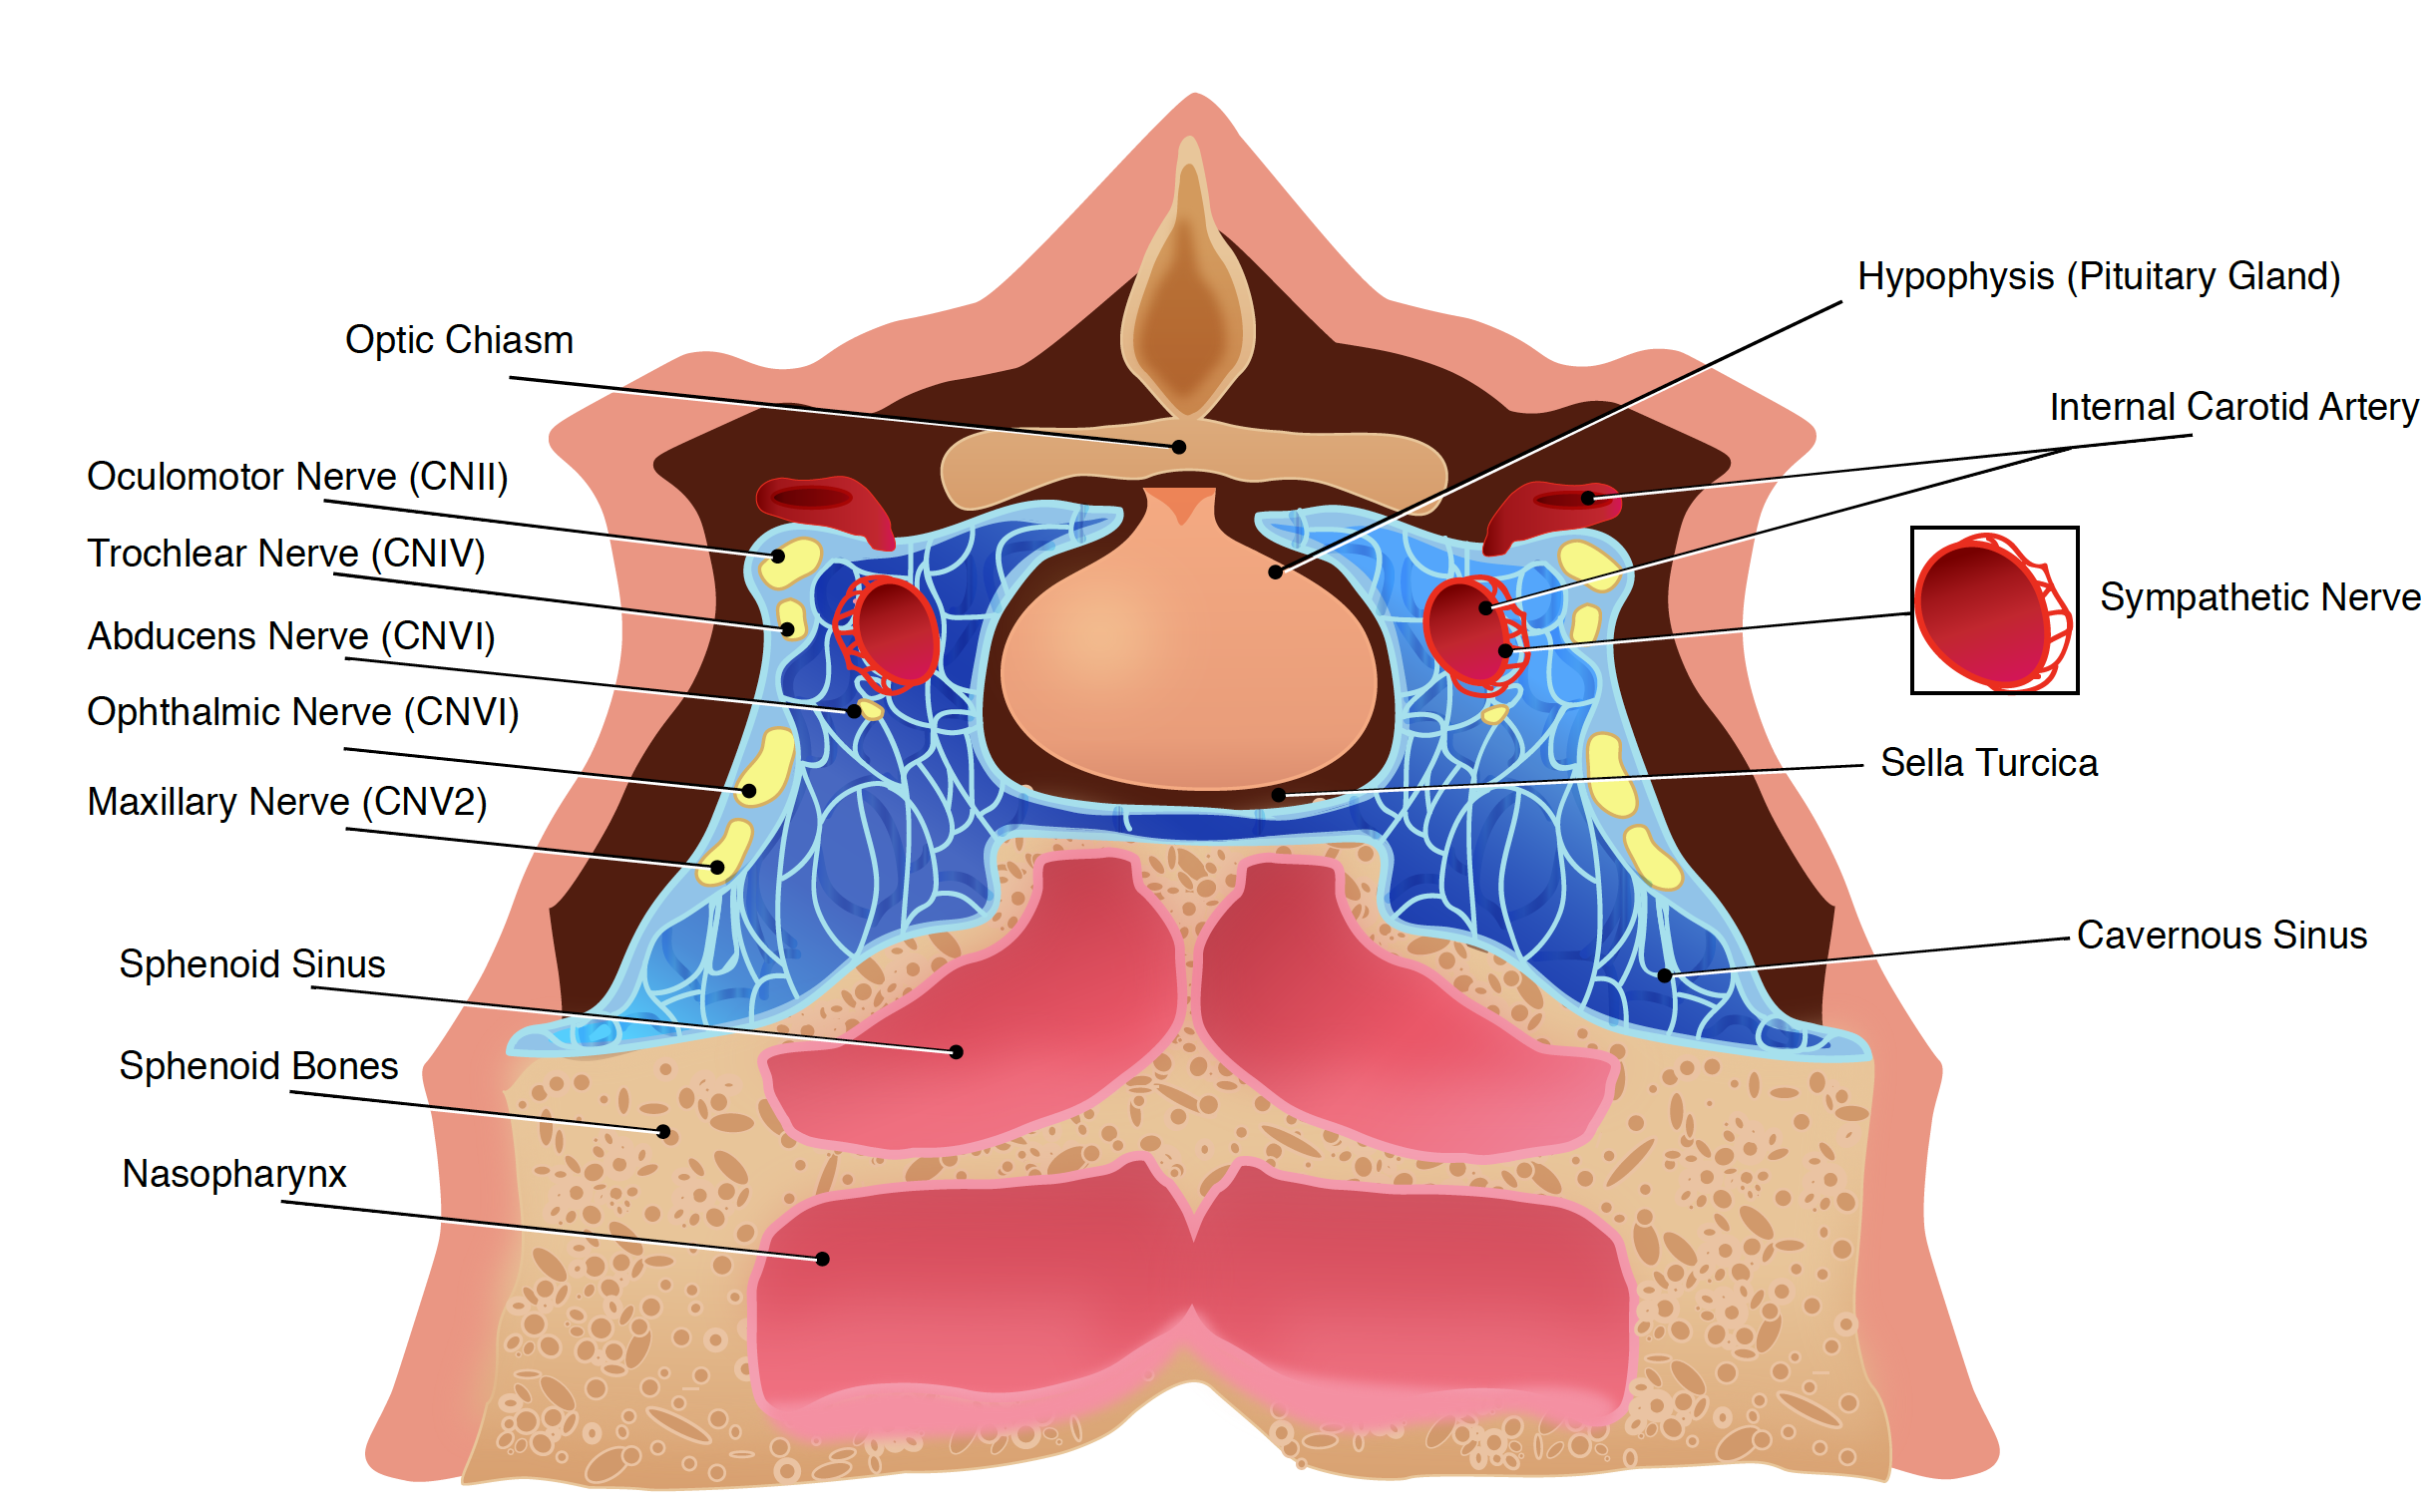 Anatomy of the cavernous sinus